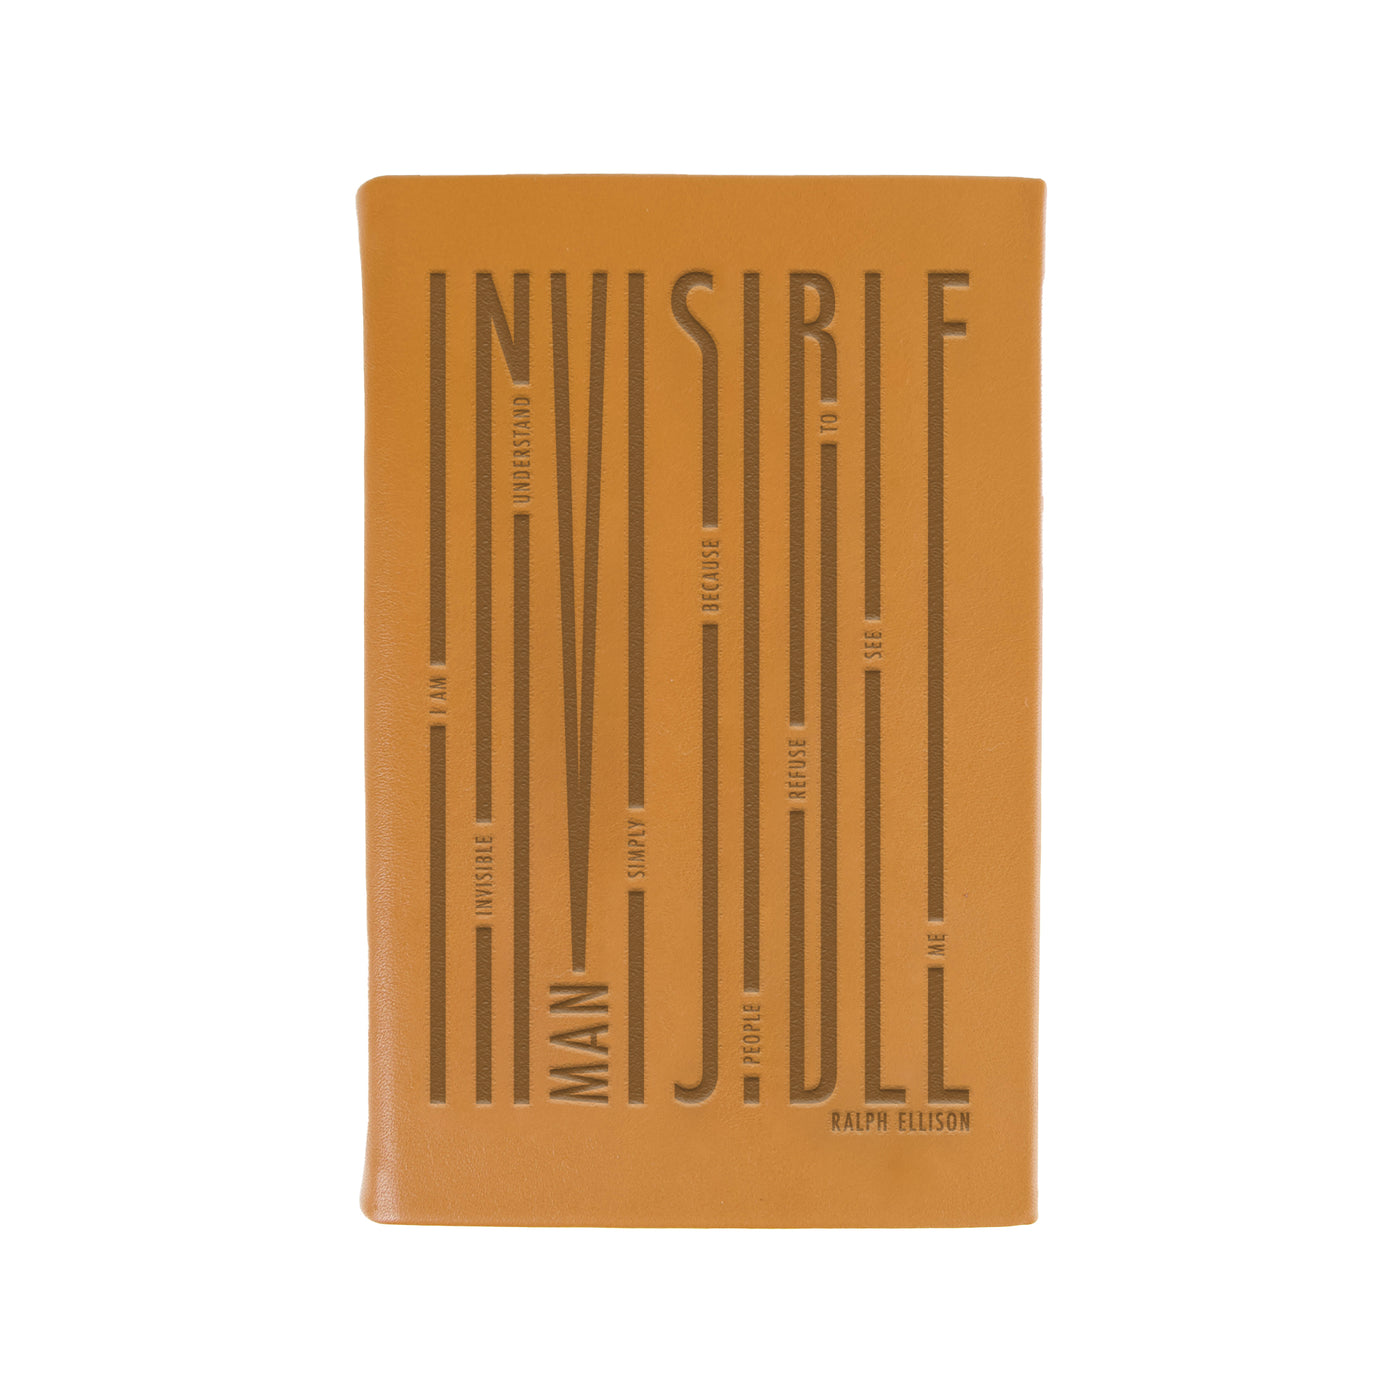 invisible man book ralph ellison